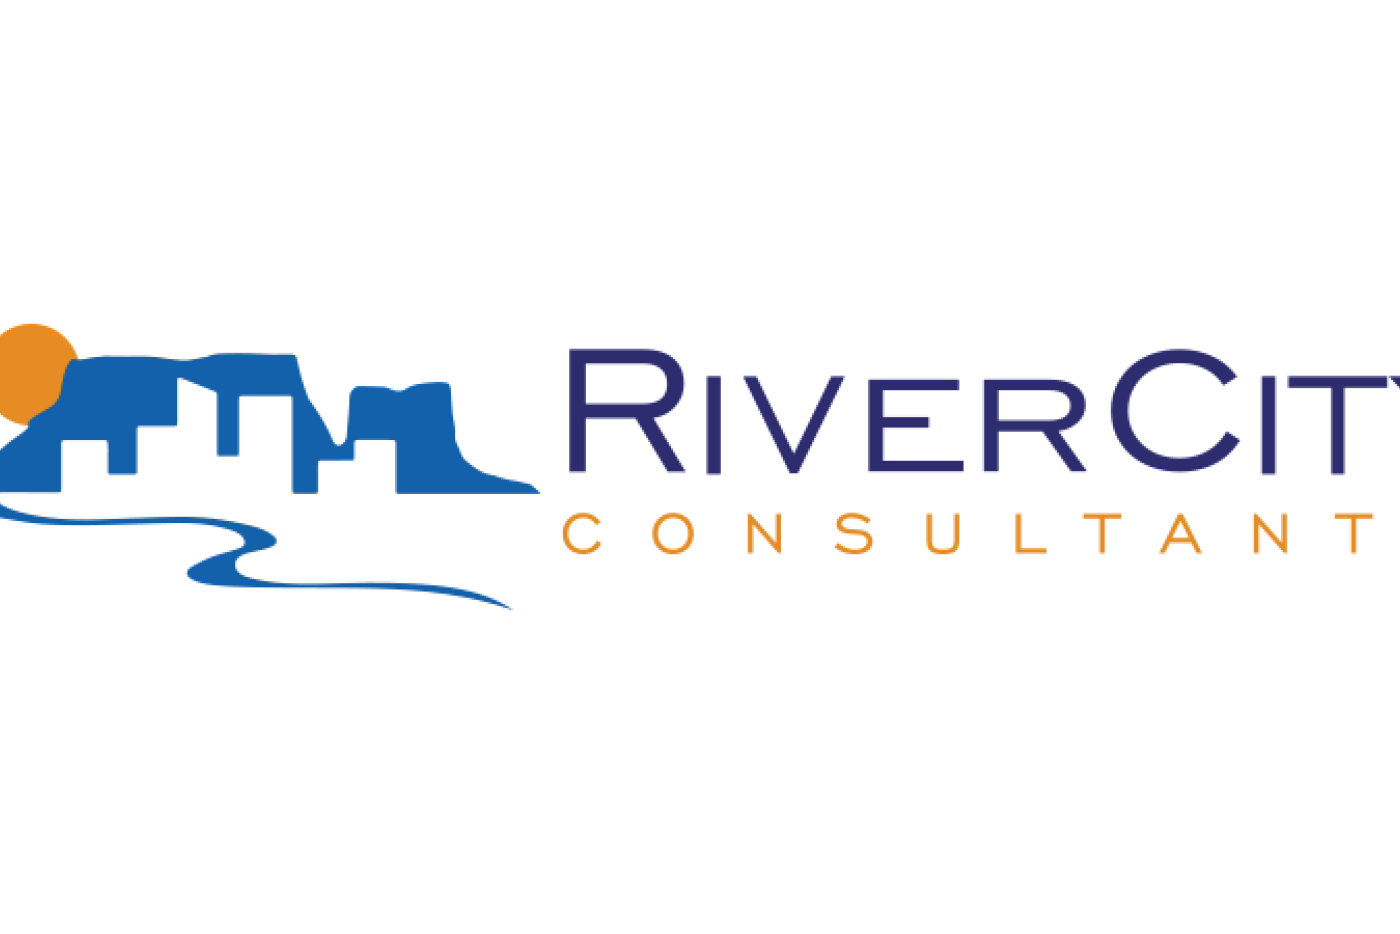 River City Consultants